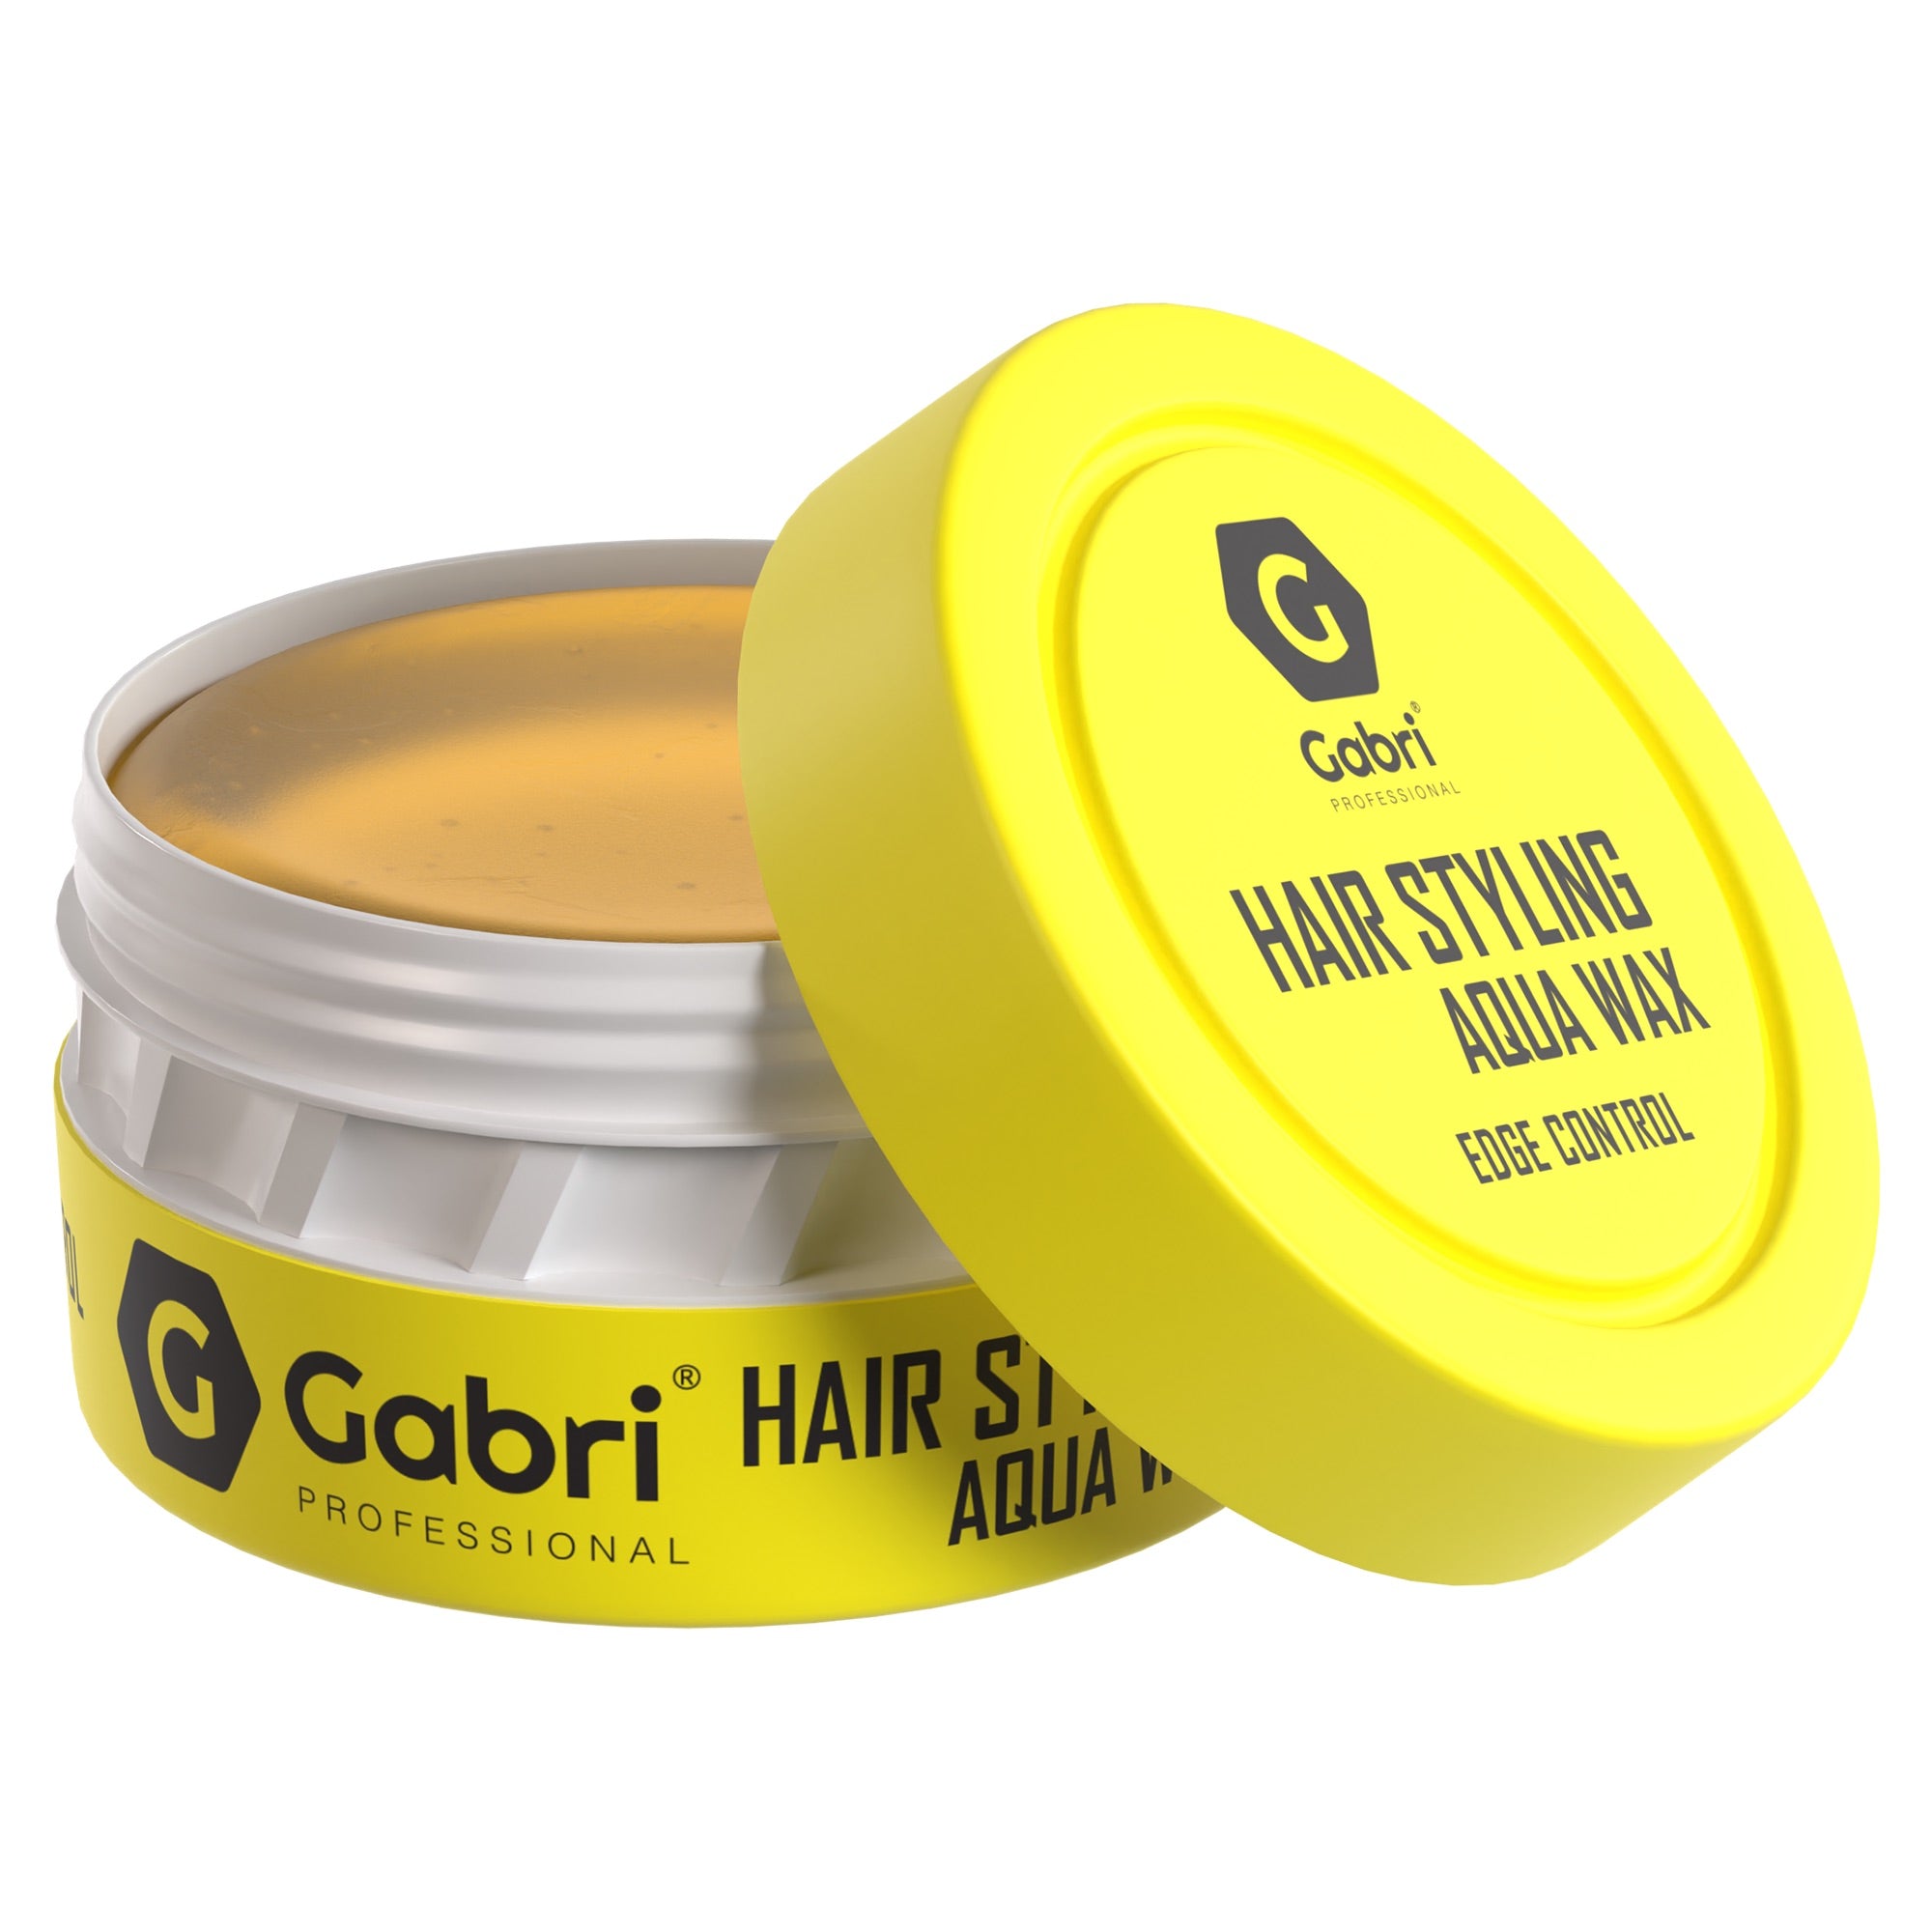 Gabri Professional - Hair Styling Aqua Wax Edge Control 150ml